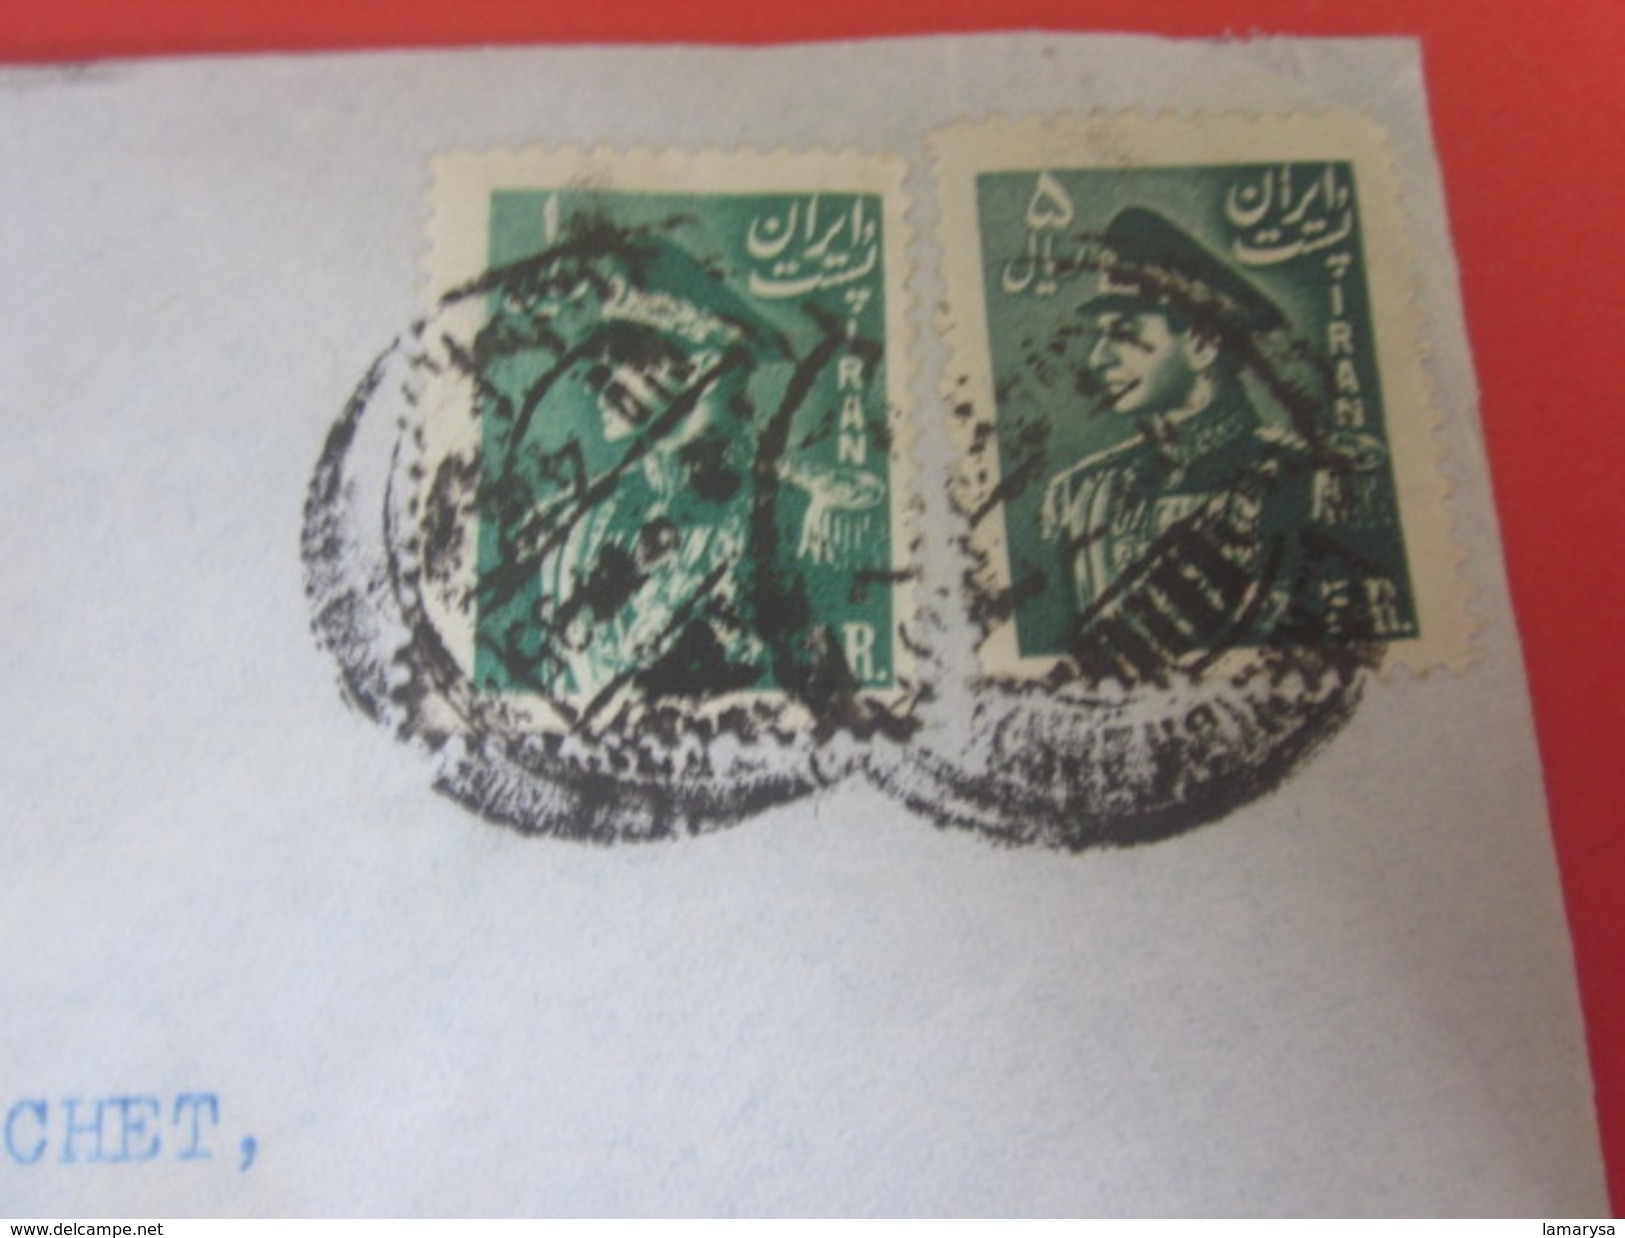 Asie Téhéran Iran-Letter-Lettre-Stamp -Timbre Shah By Air Mail Par Avion Via Aéra-Arménia Frankfurt Main  Allemagne - Irán